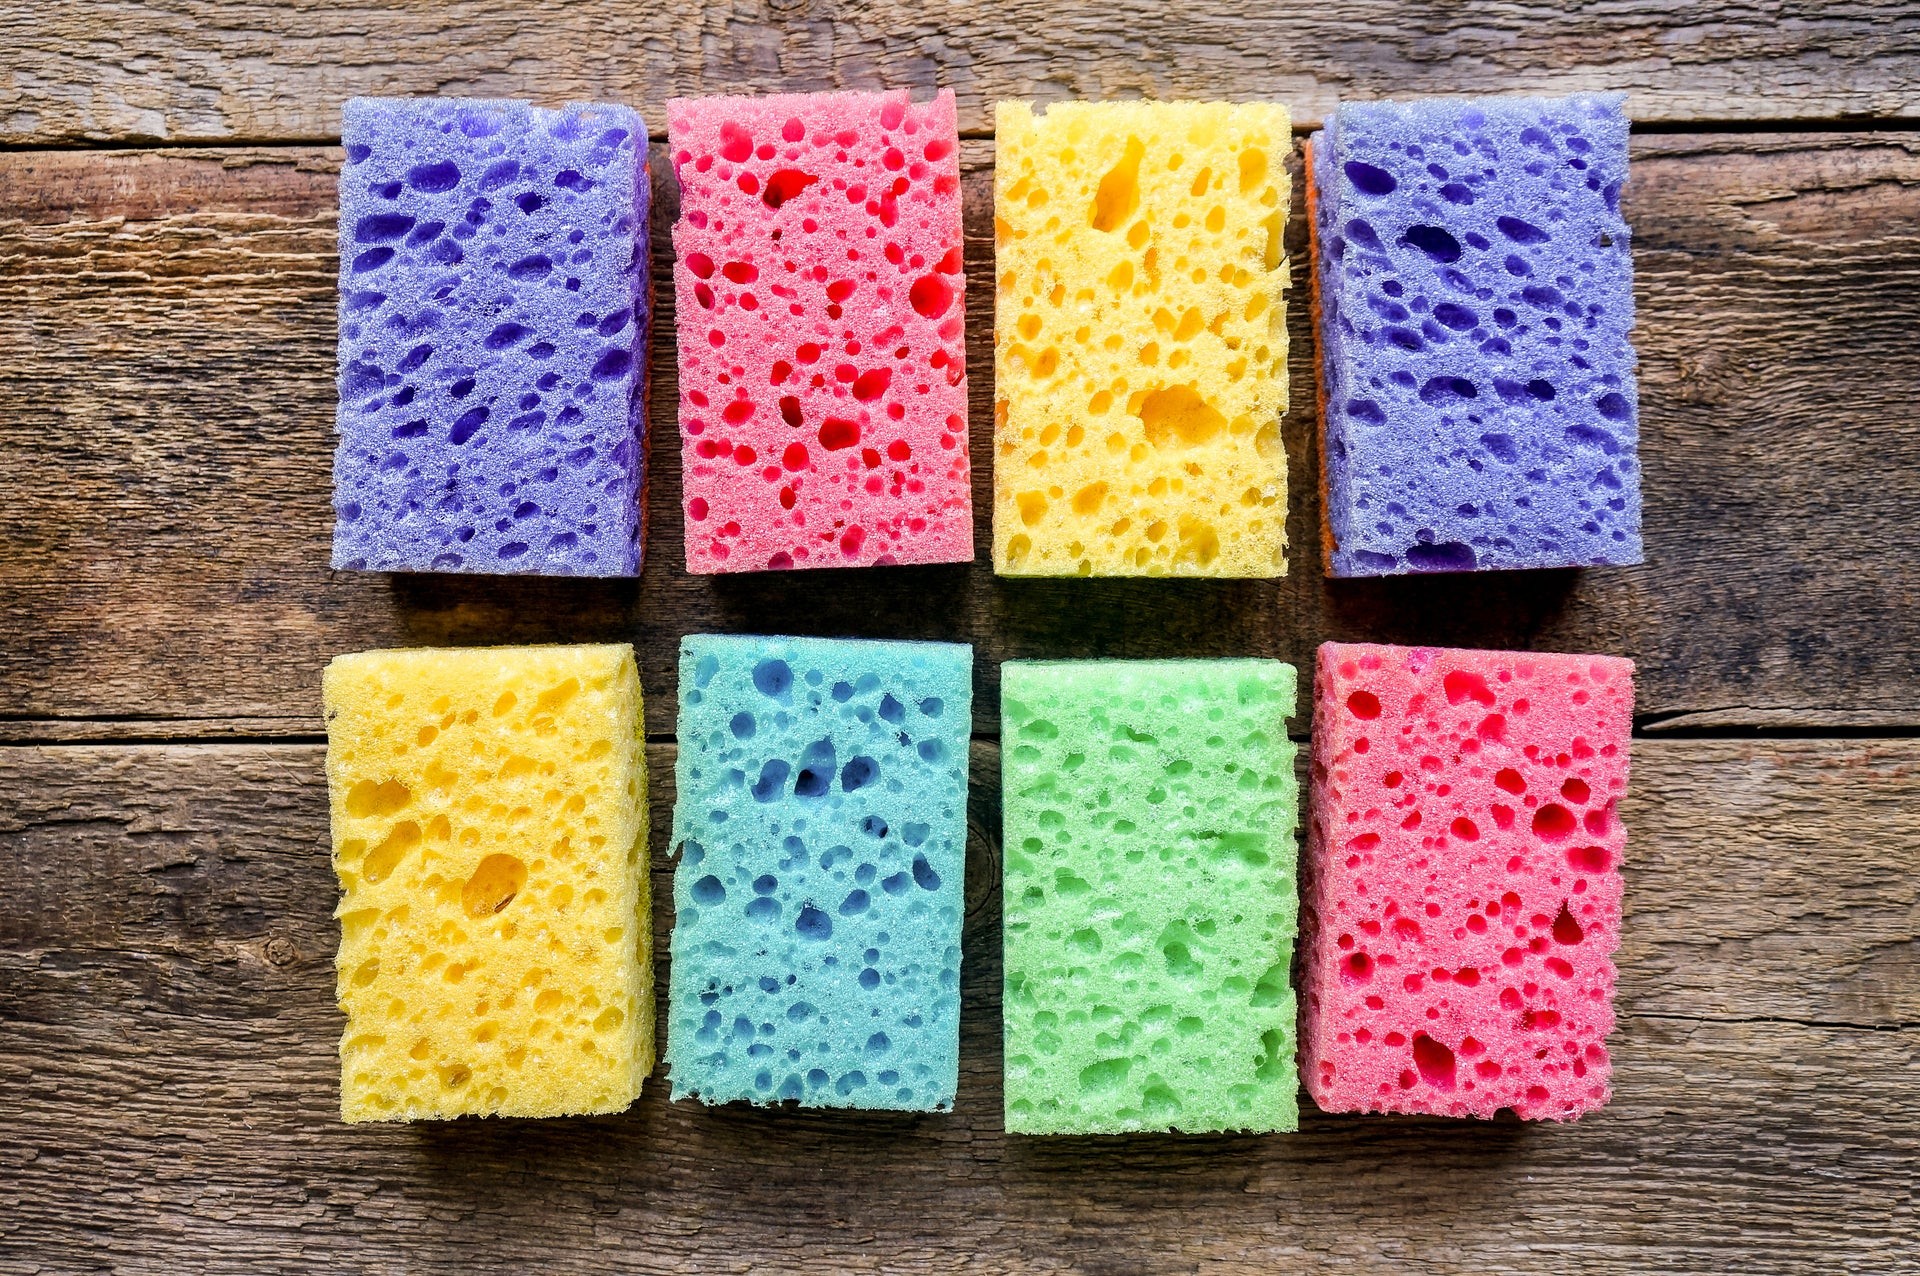 A Food Editor Shares Her Favorite Sponges